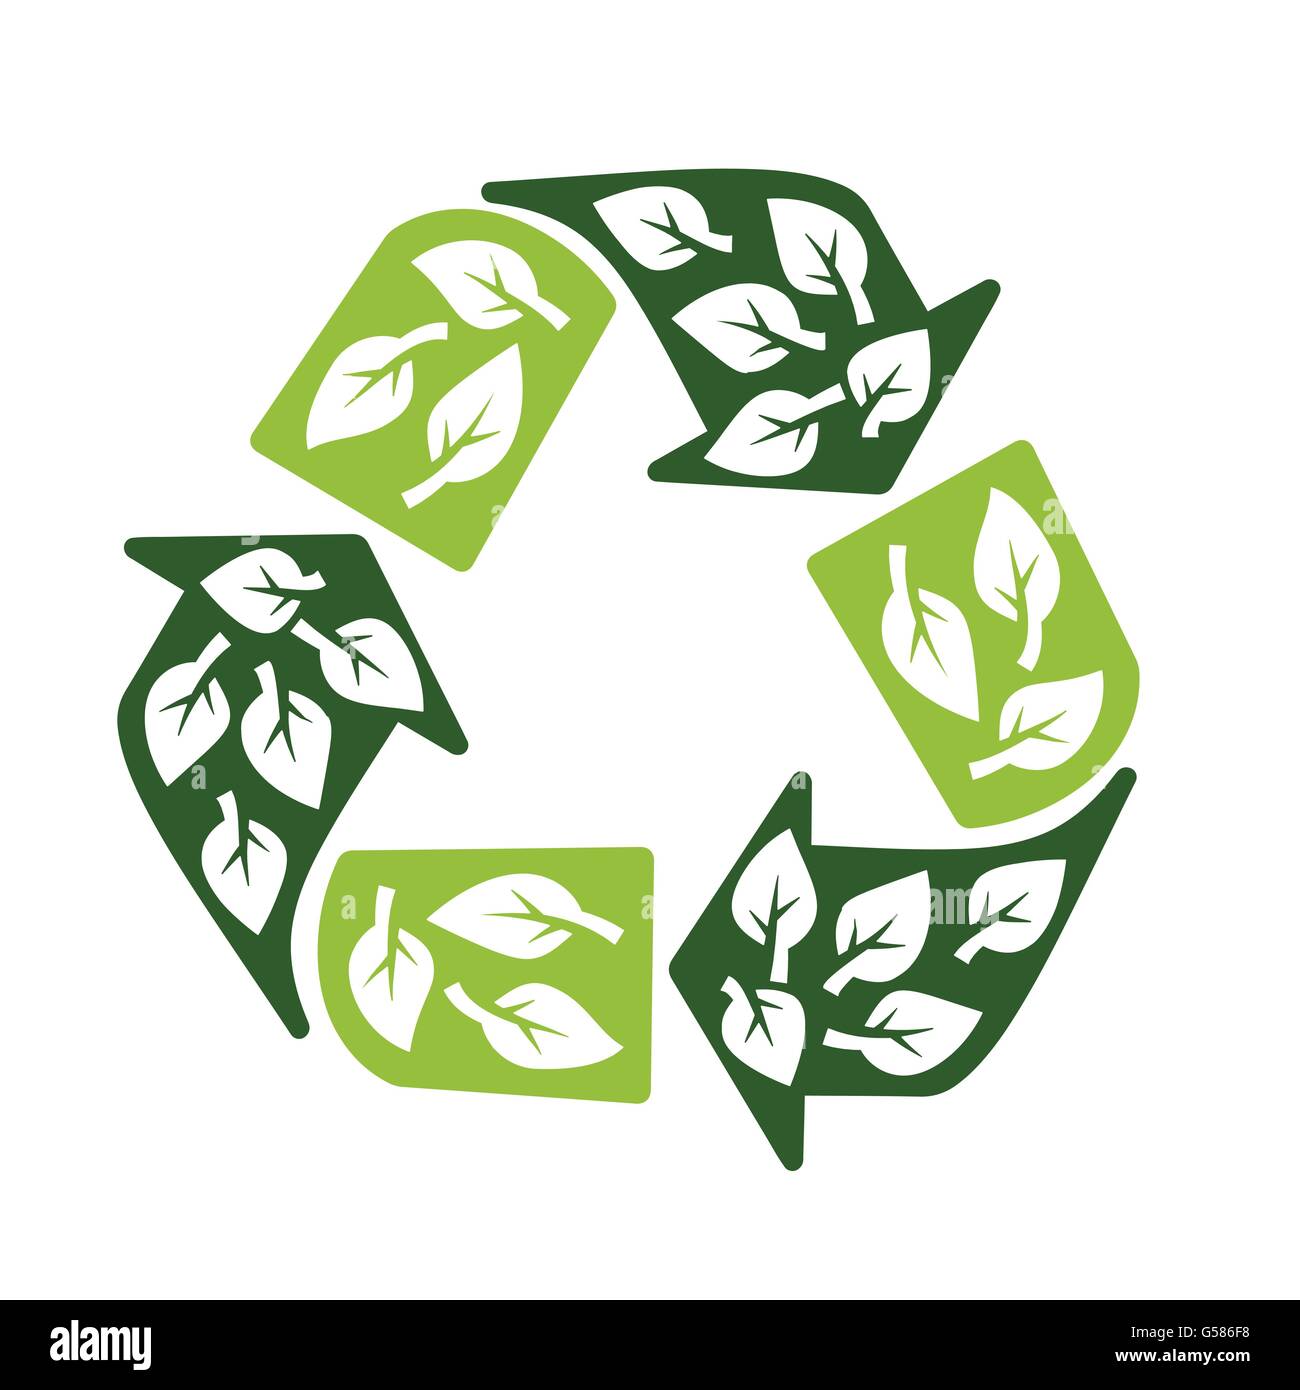 Schild mit Recycling Symbol-Eco-Schutz-Konzept-Vektor-Illustration verlässt Stock Vektor